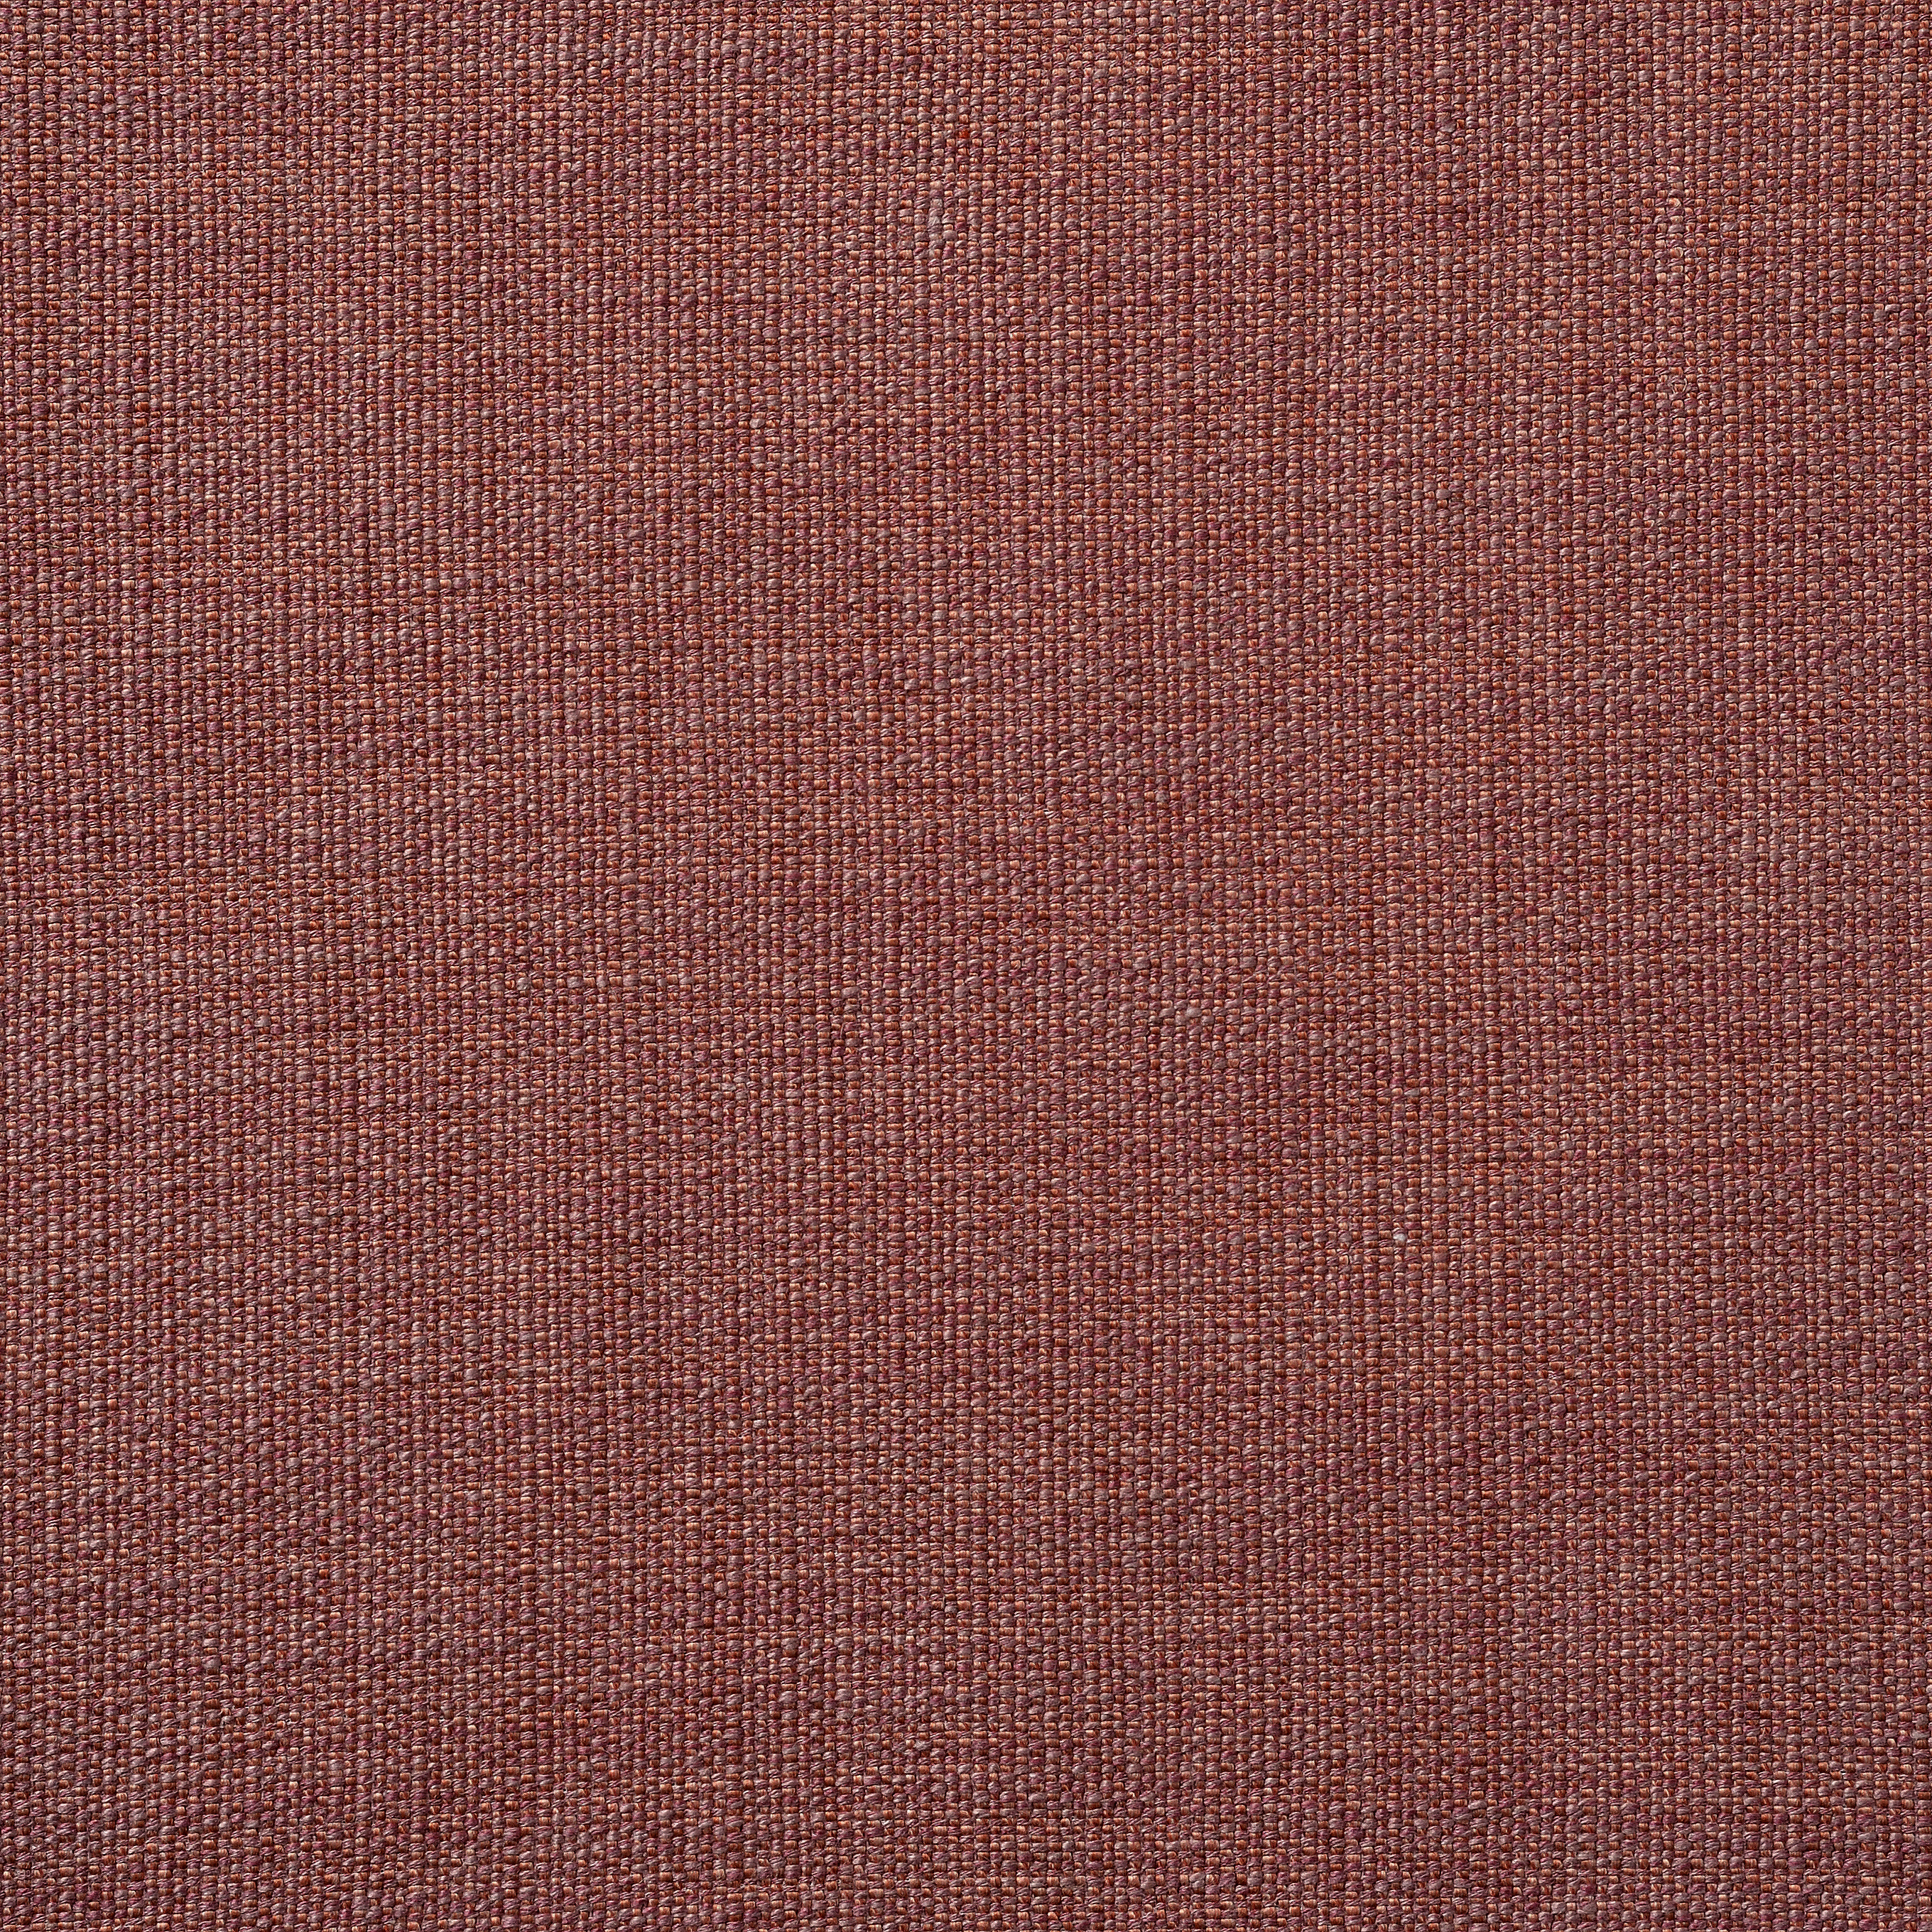 Cooper Rustic Weave - Blush Marl